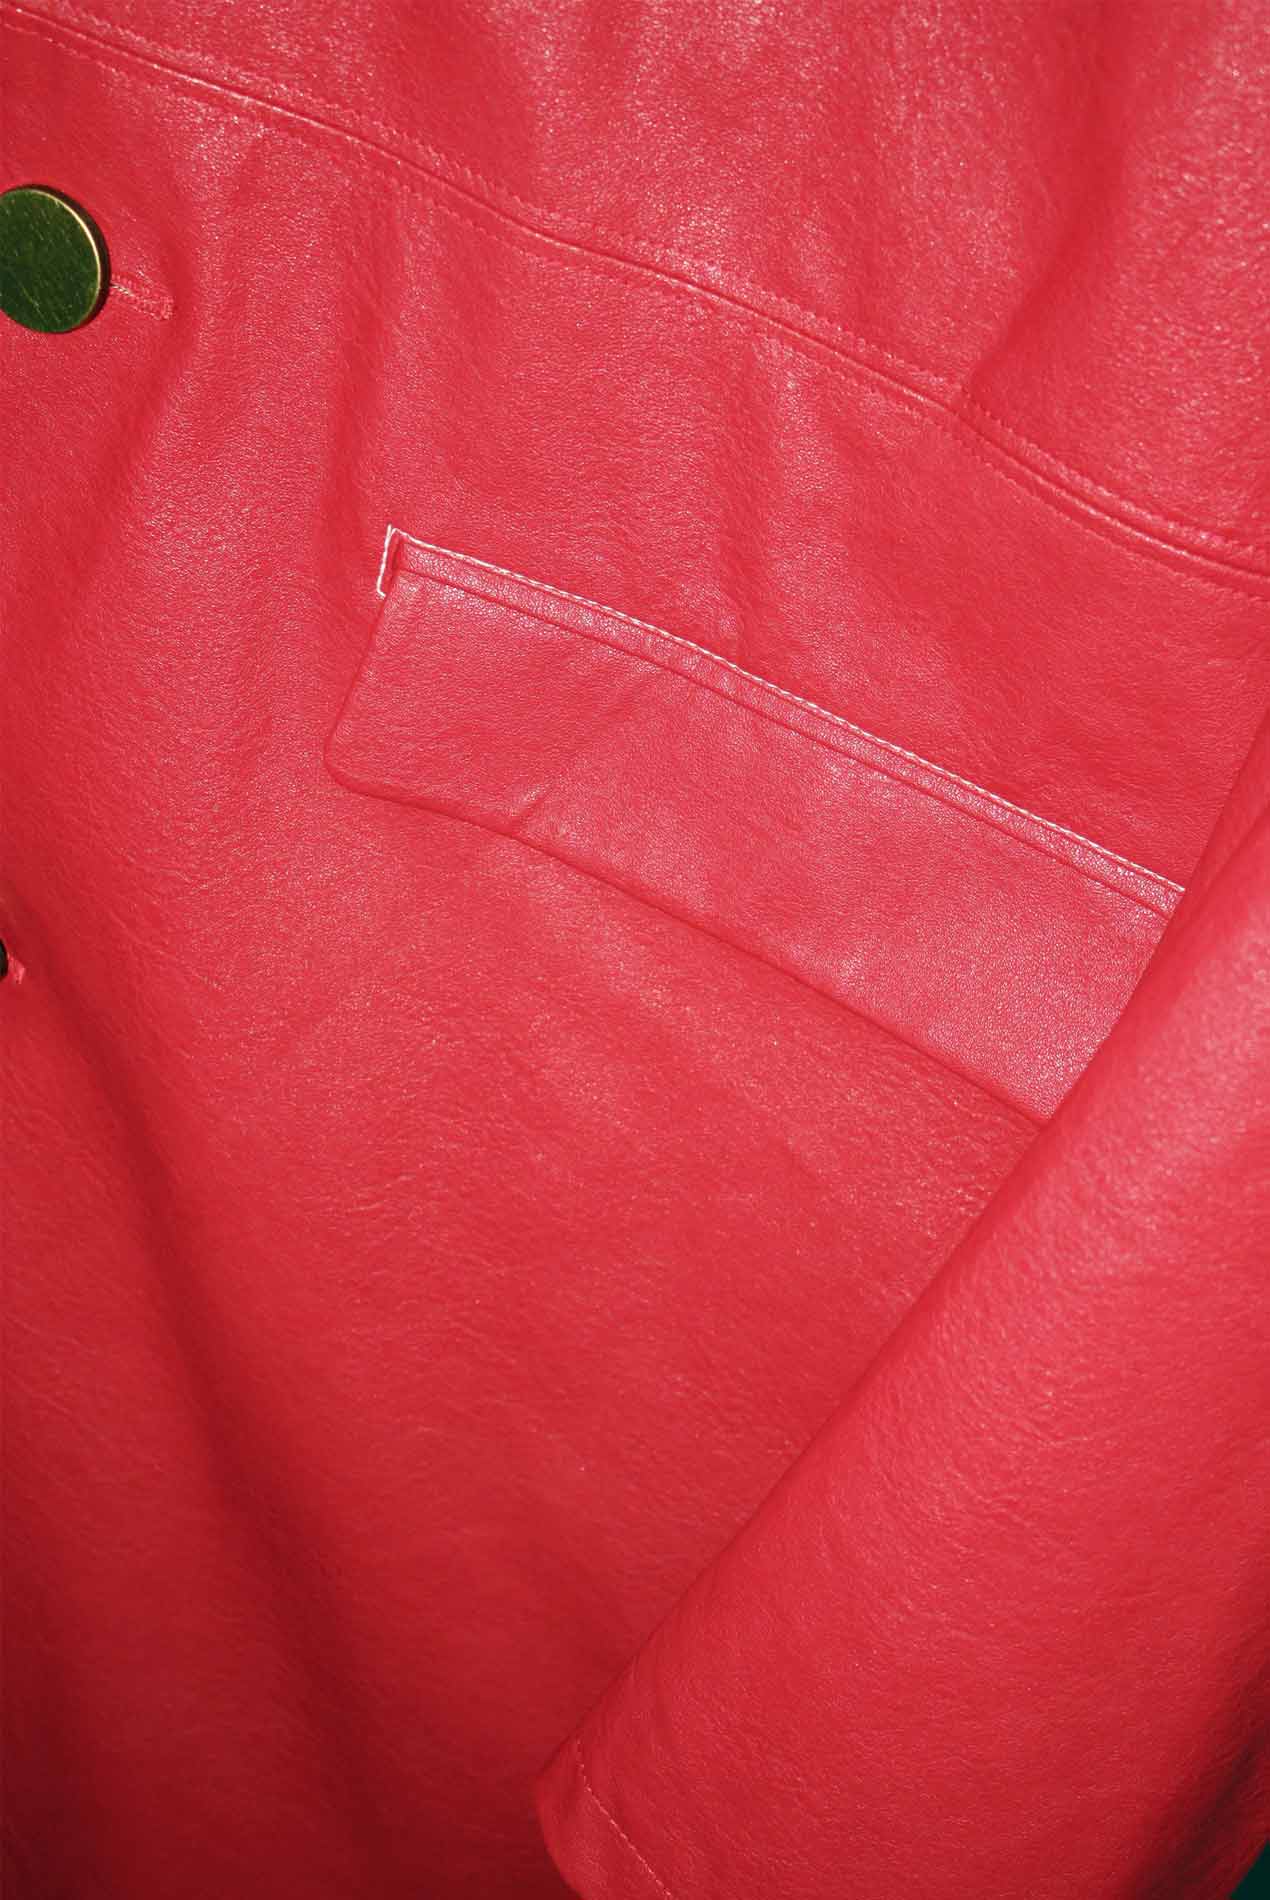 Mule Leather Coat Vintage Red